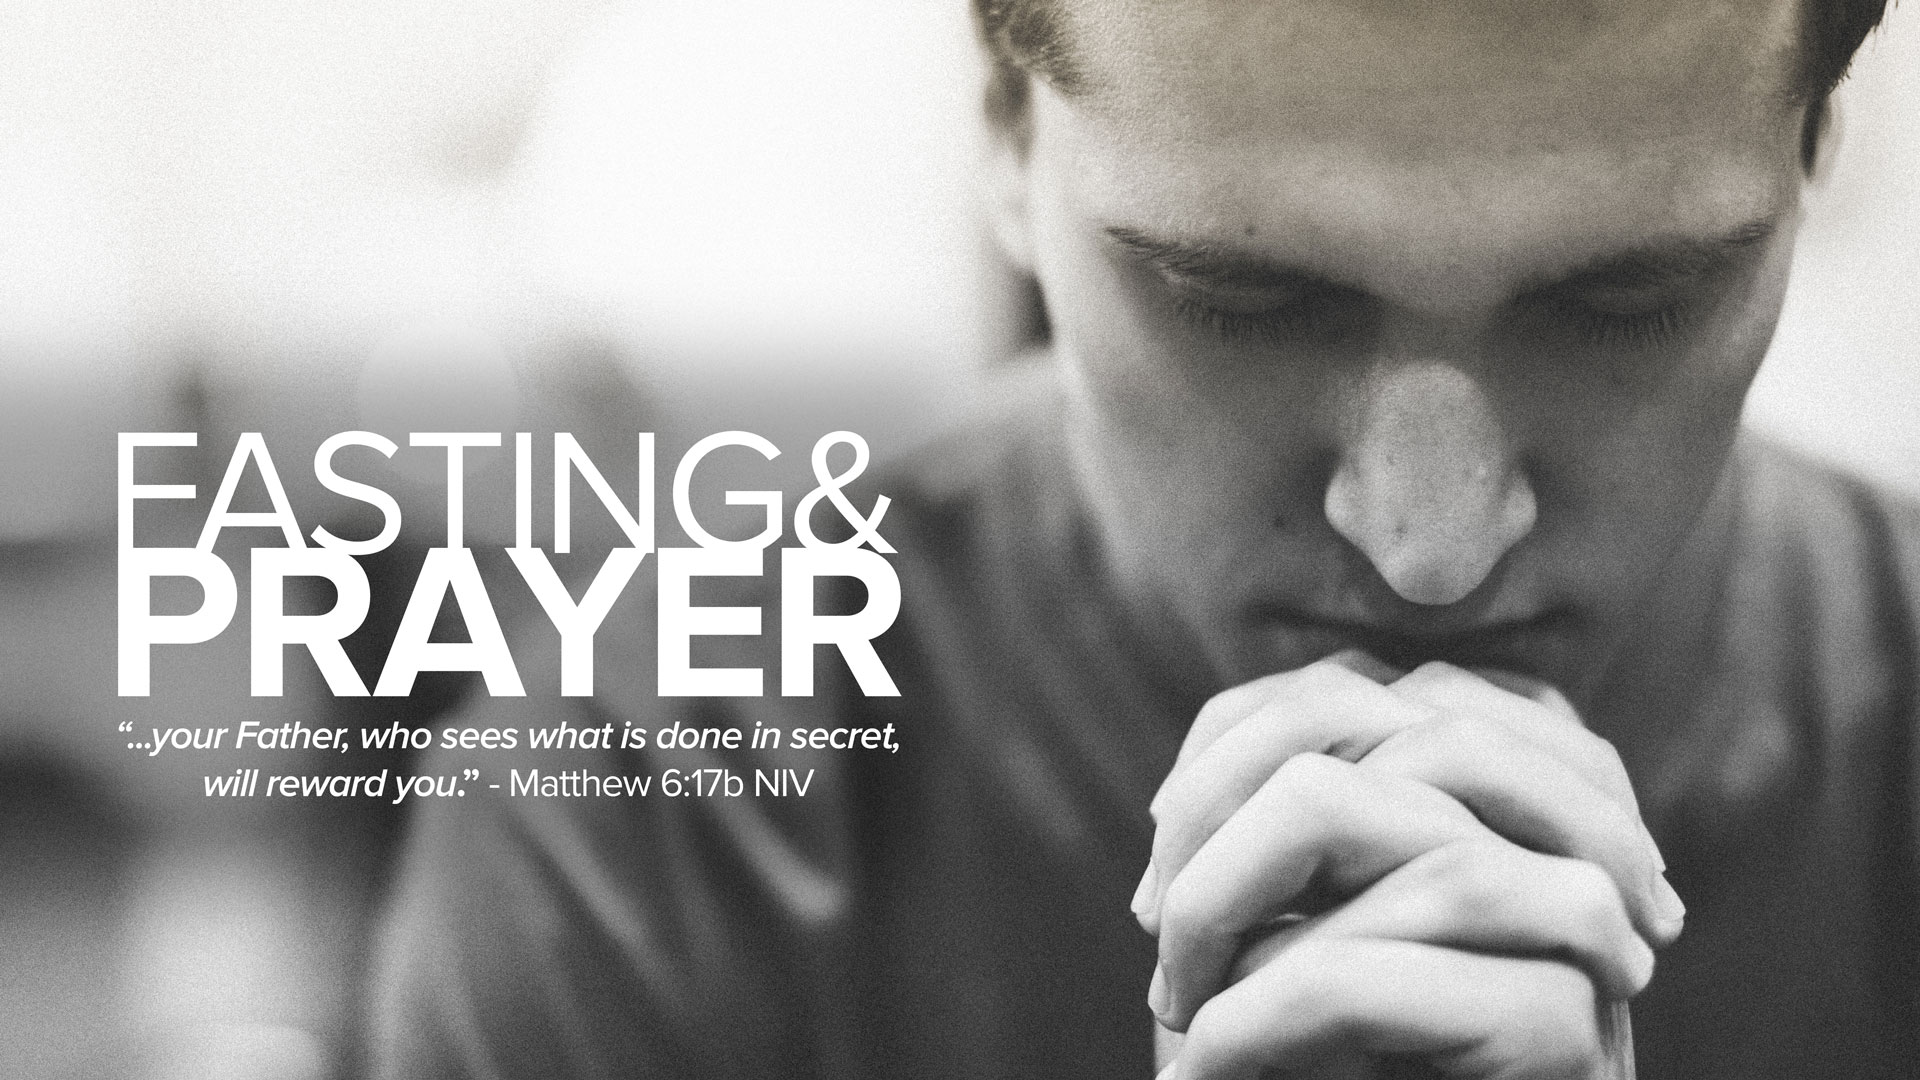 Fasting and prayer